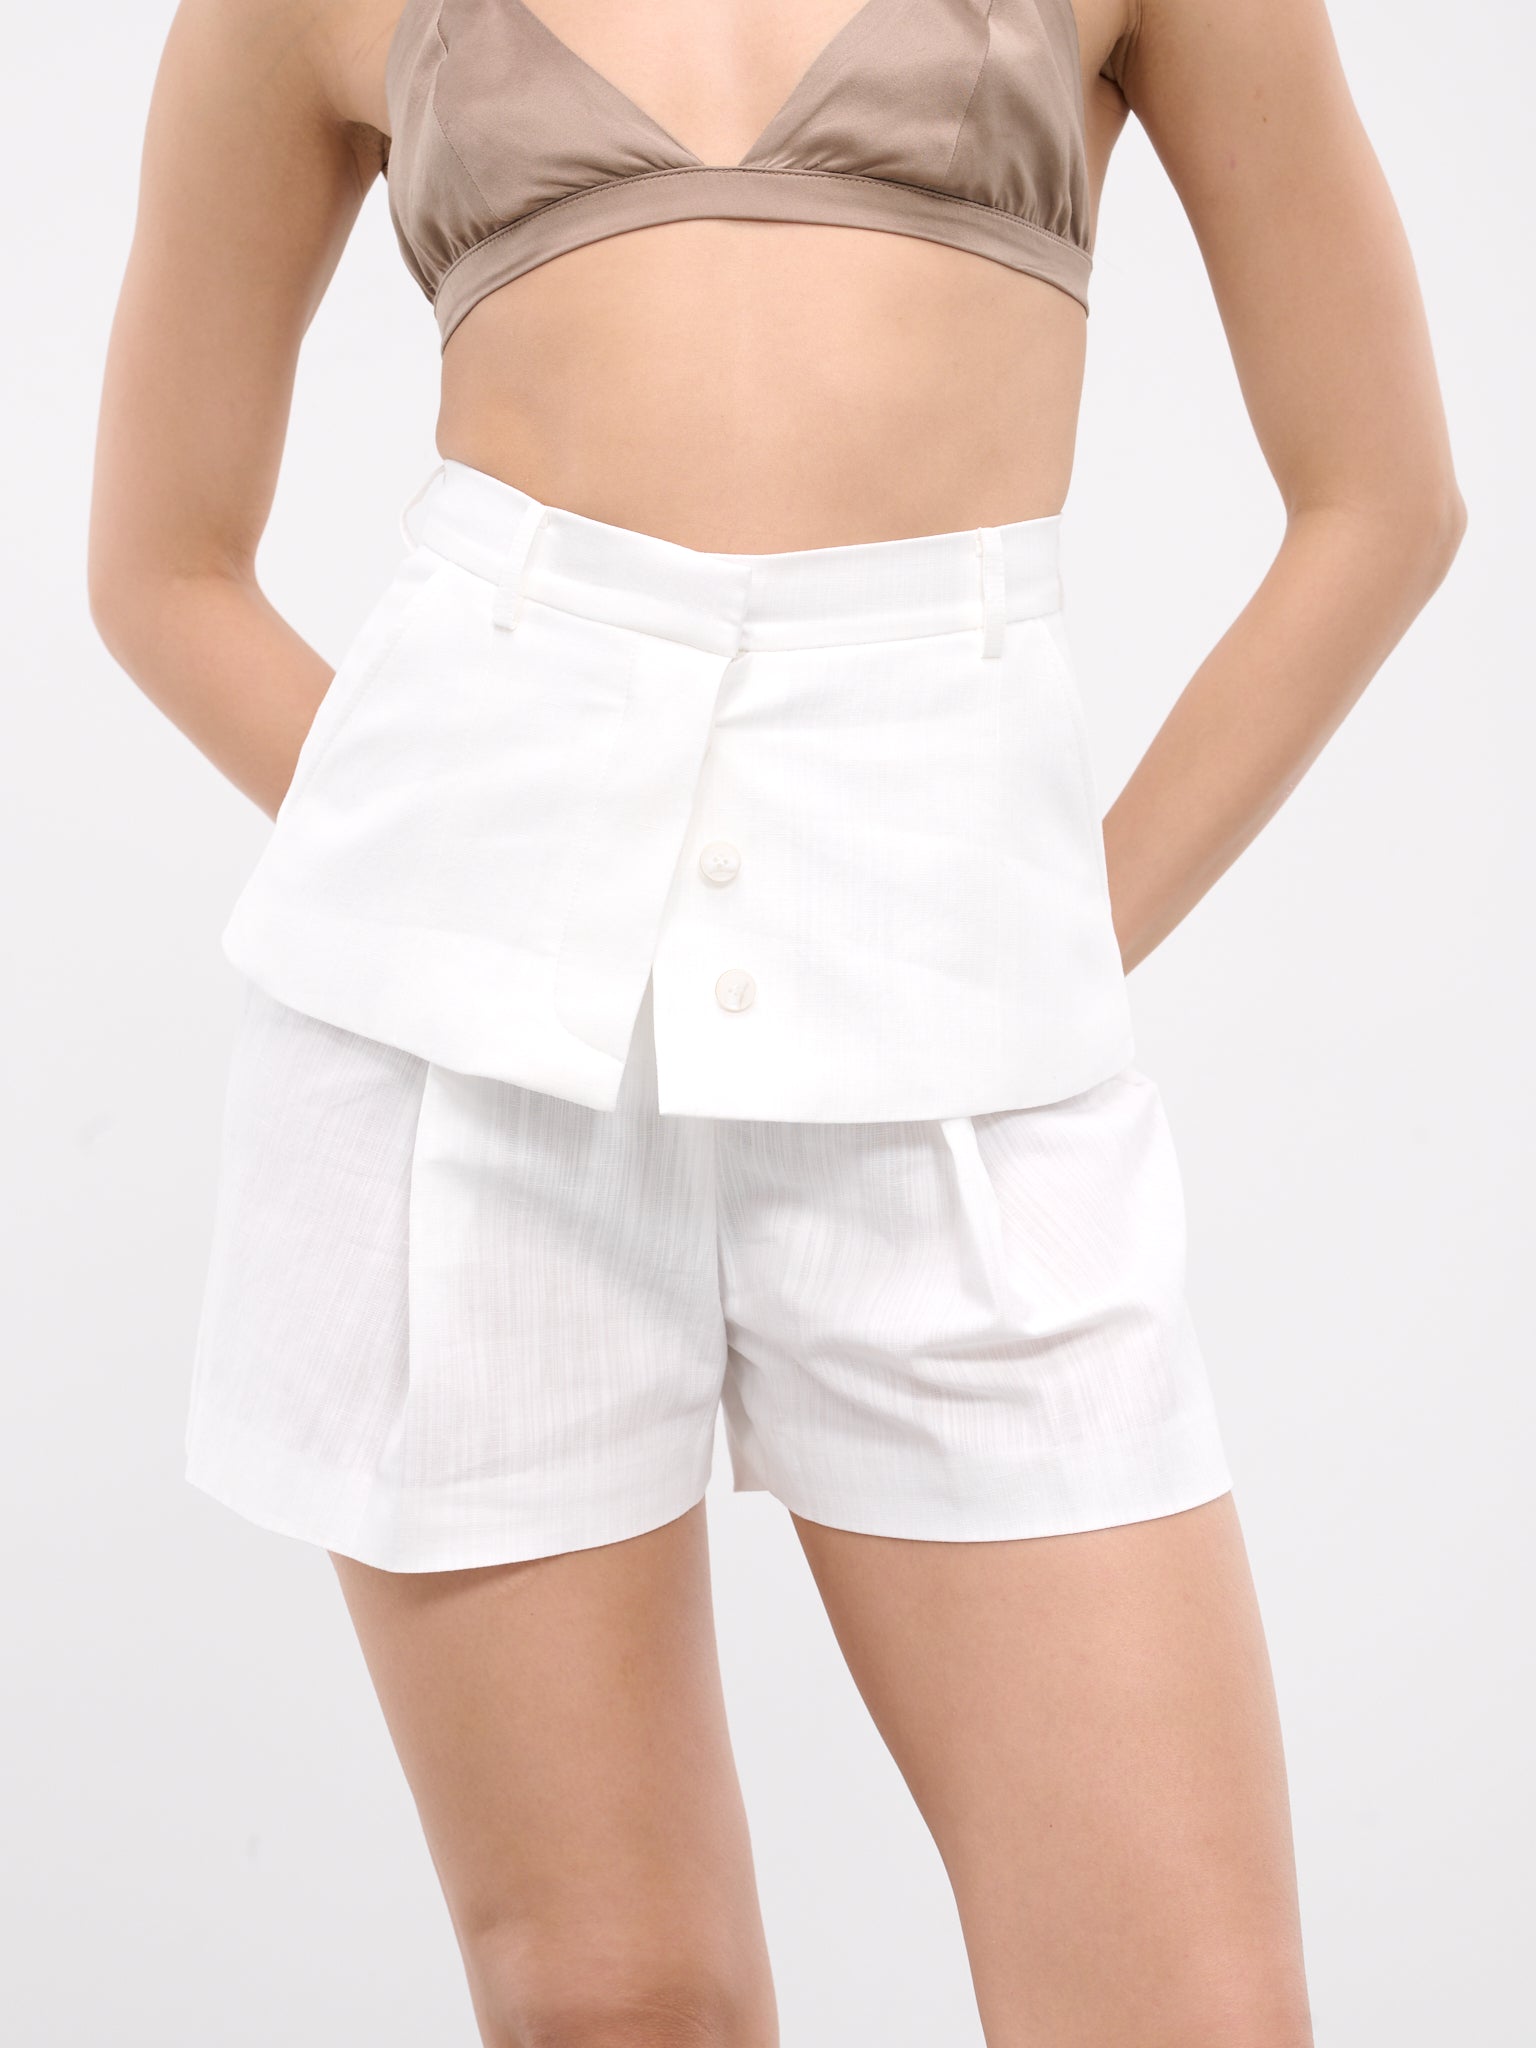 Skirt Shorts (ST03WH-WHITE)